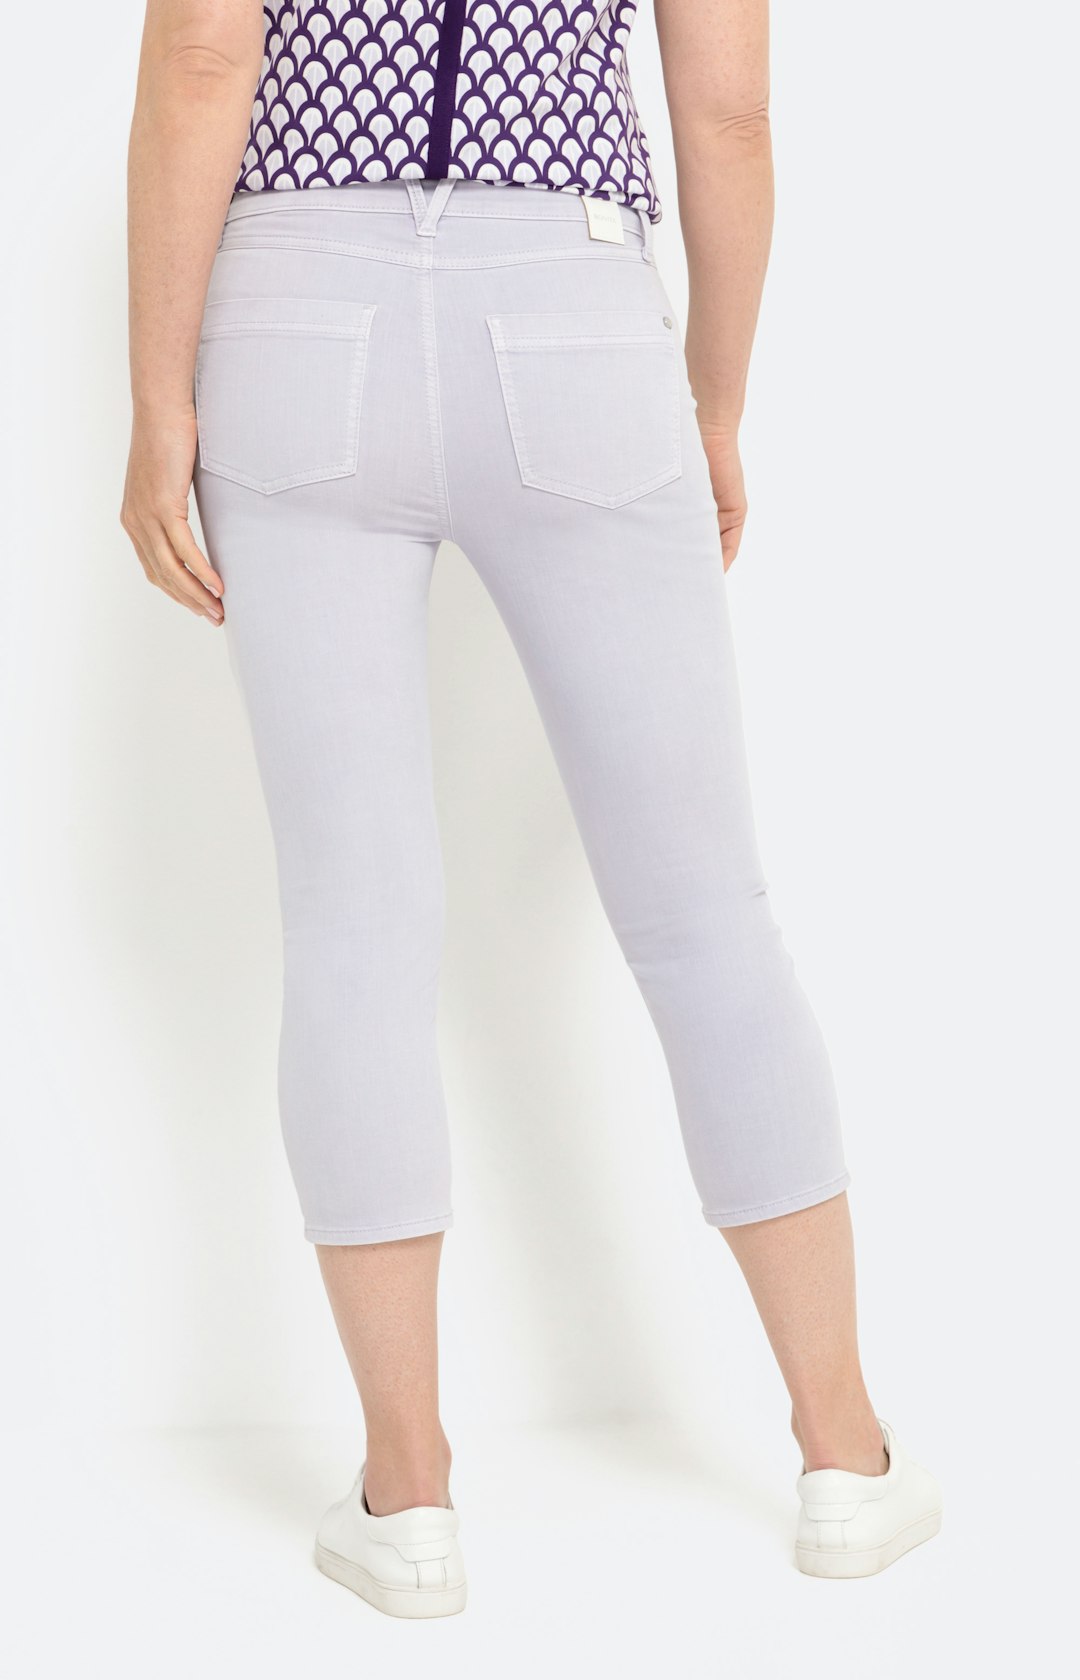 Gekleurde capri-jeans 22 inch